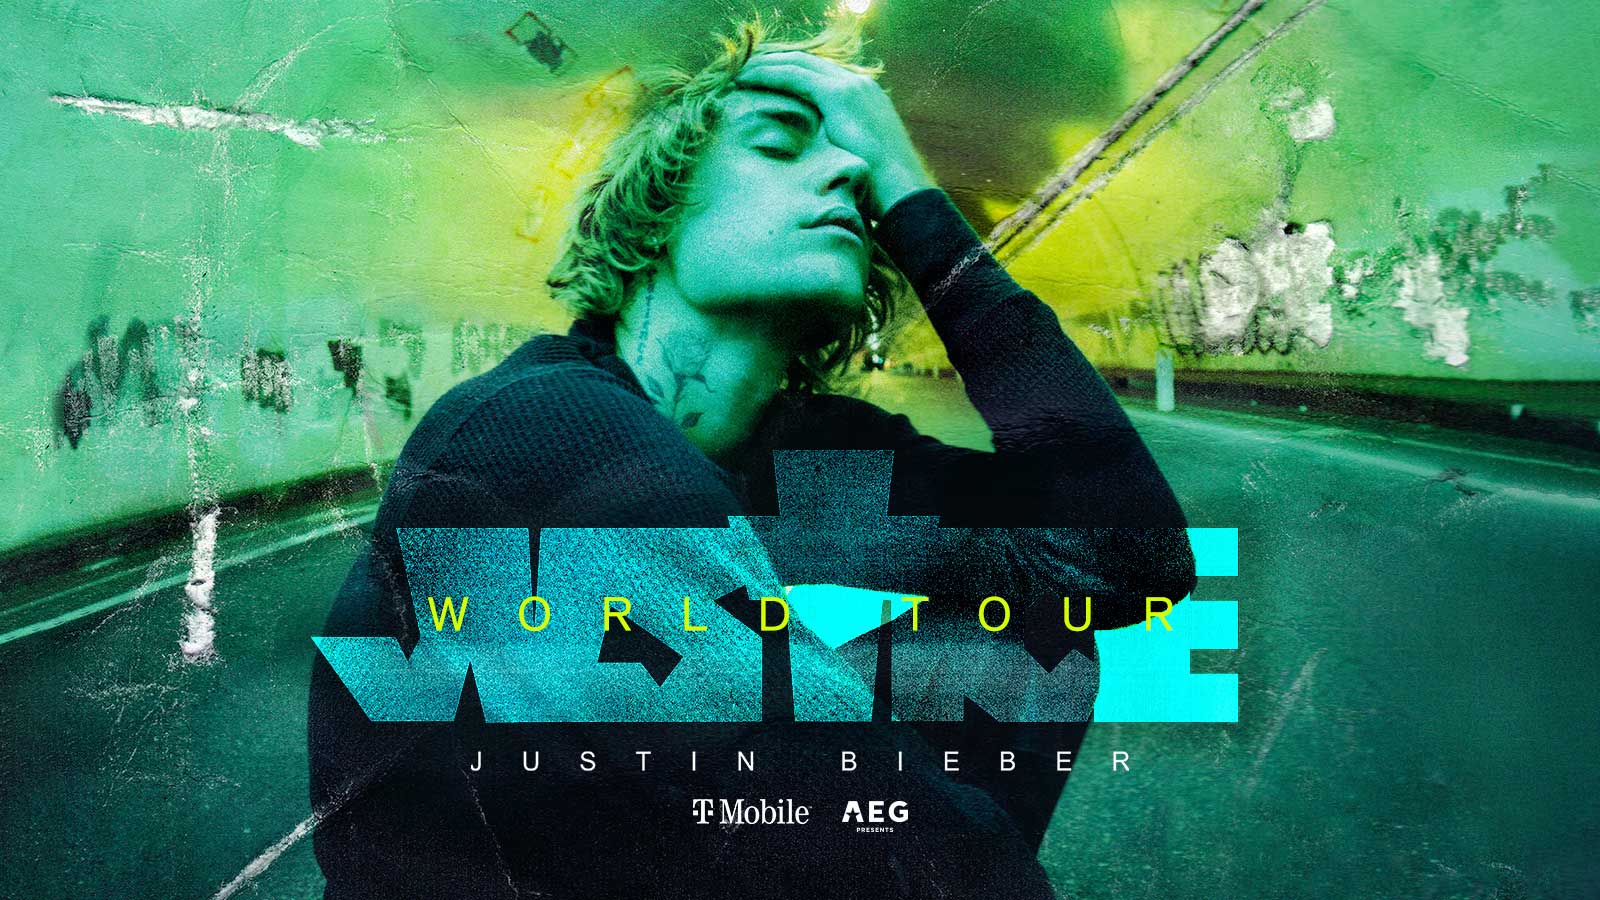 World Tour Justice